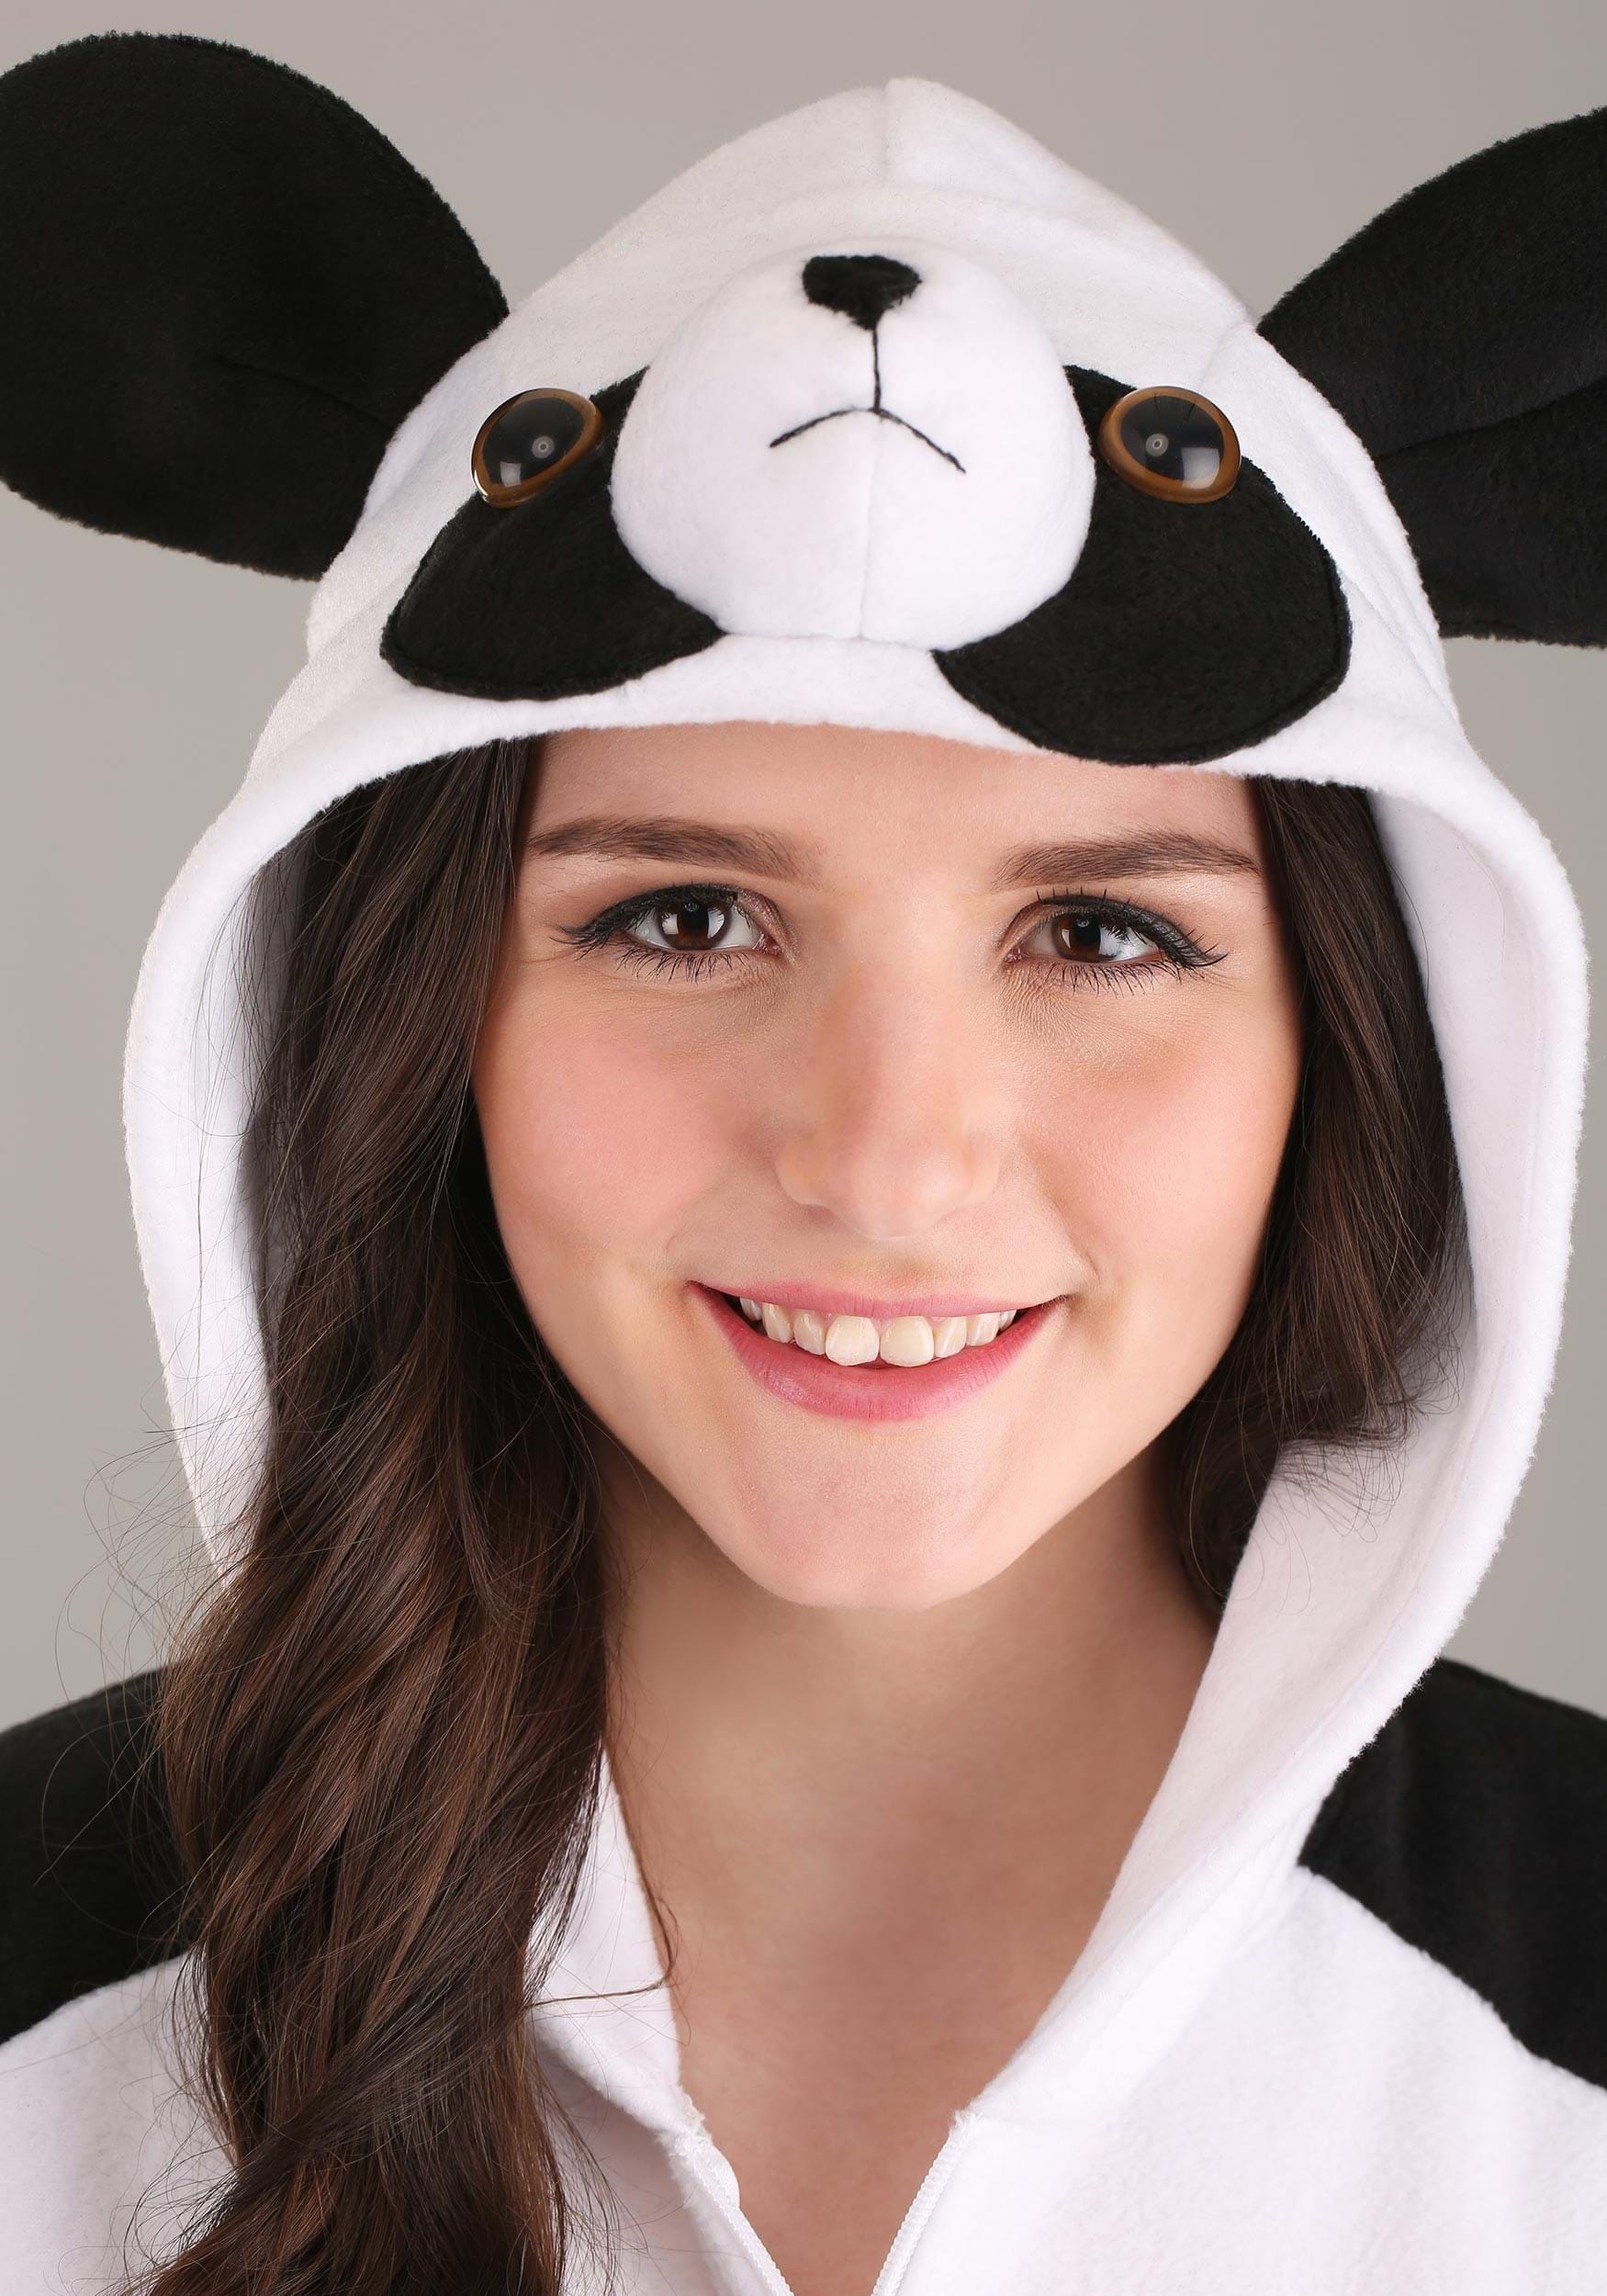 Panda Adult Onesie Costume